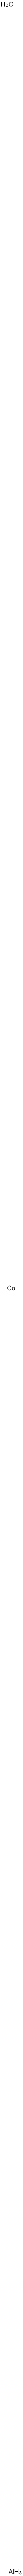 Aluminum cobalt oxide